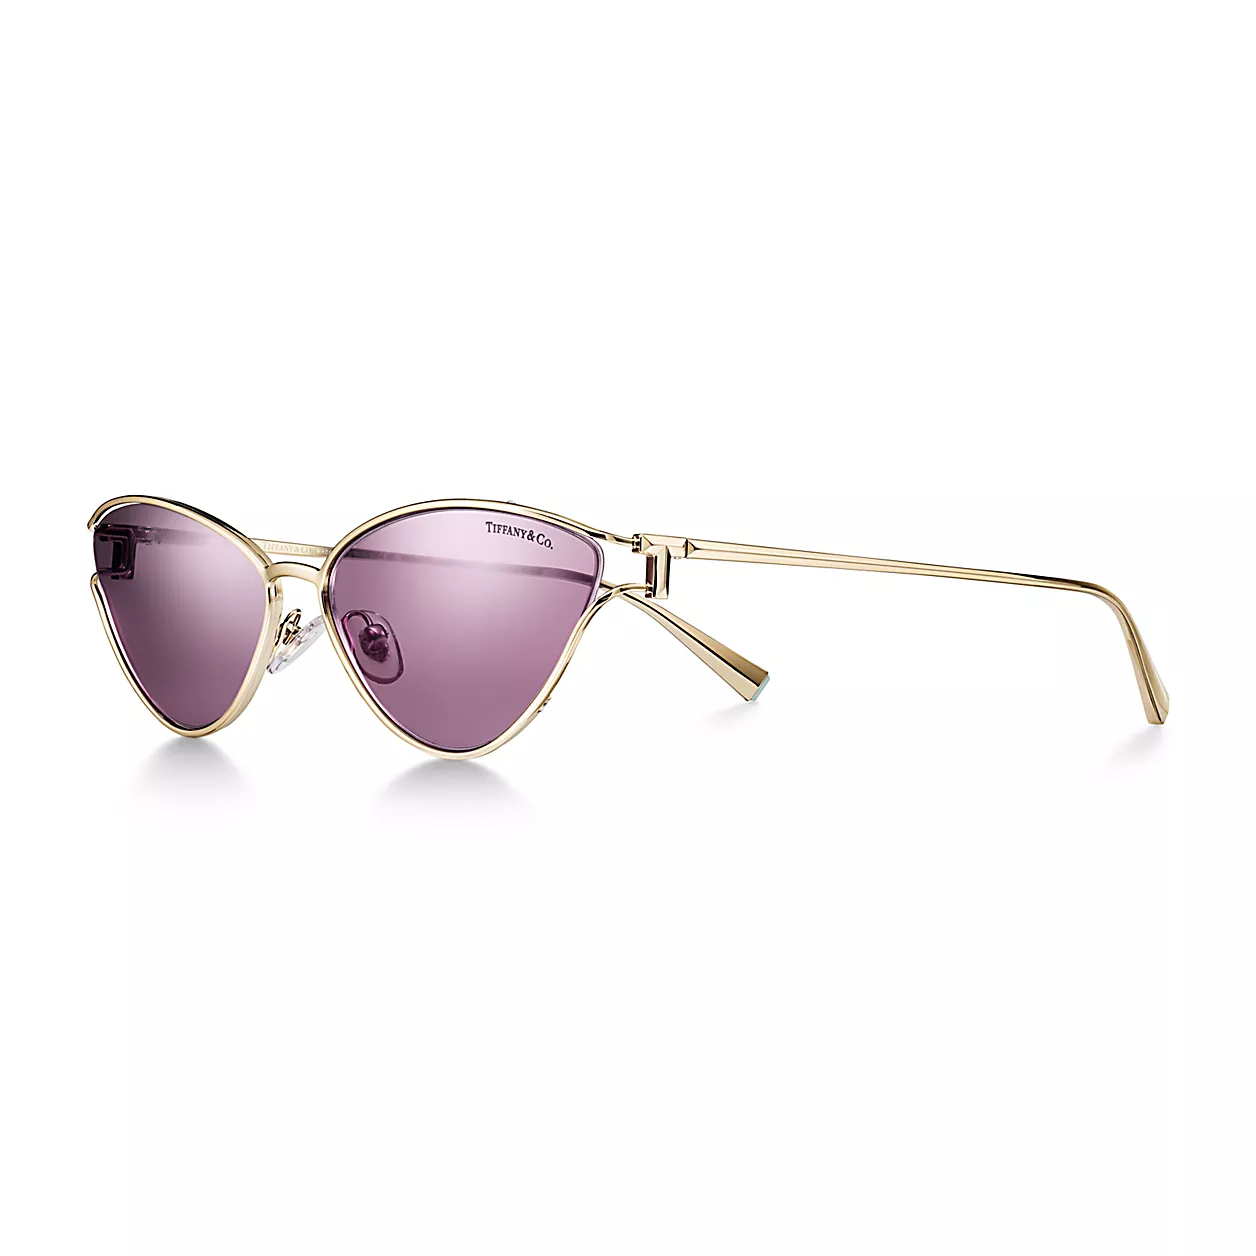 Tiffany T:선글라스, 페일 골드 컬러 메탈, 바이올렛 미러 렌즈 세팅 이미지 번호 0